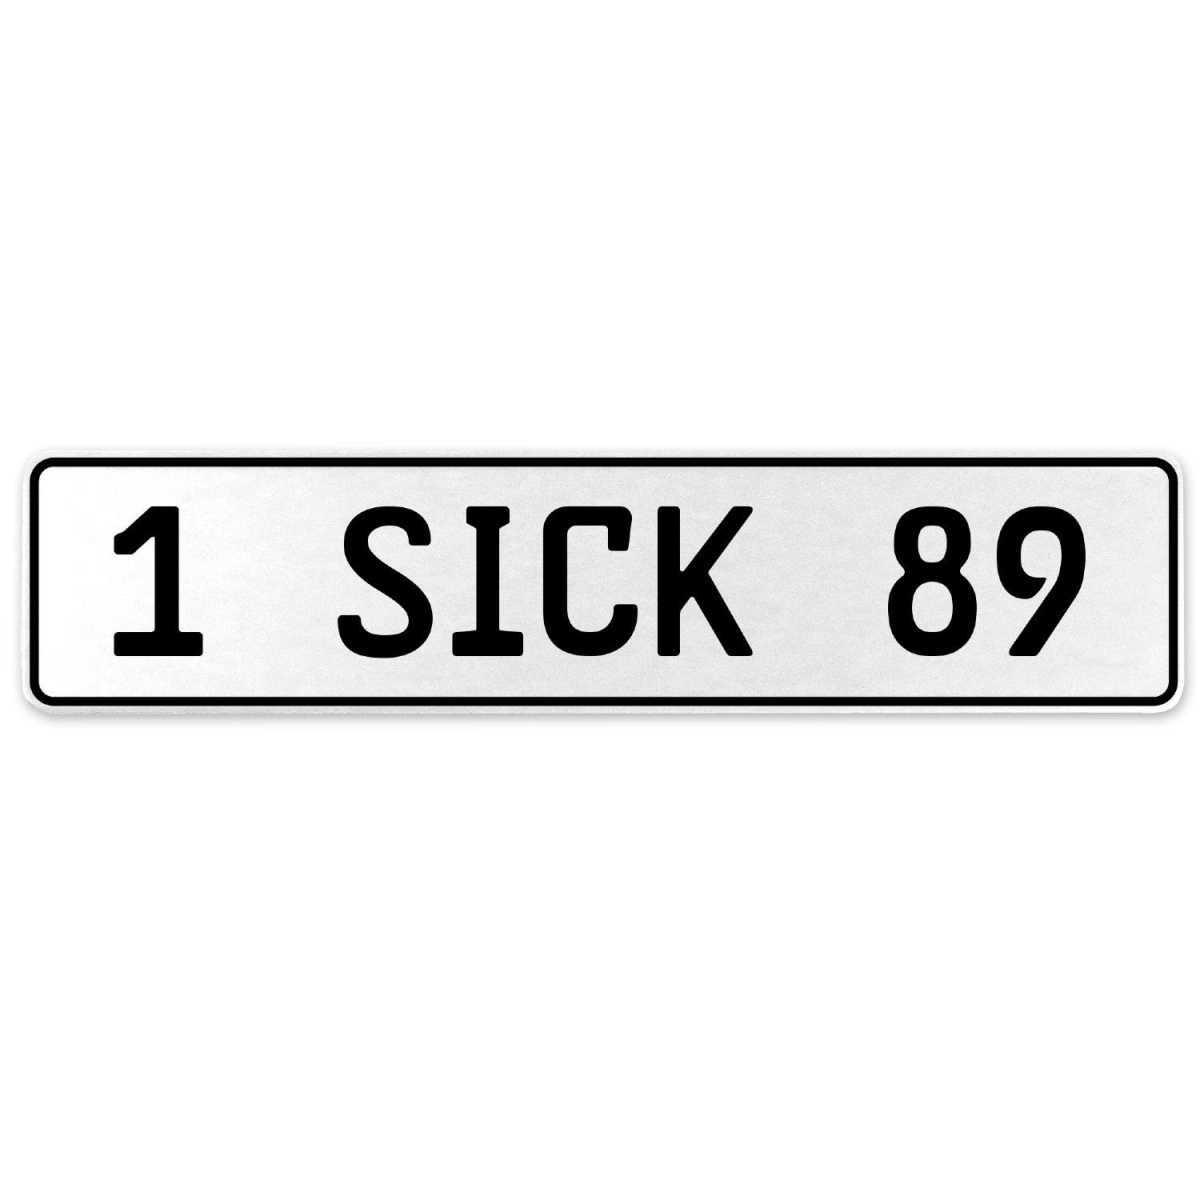 554488 1 Sick 89 - White Aluminum Street Sign Mancave Euro Plate Name Door Sign Wall